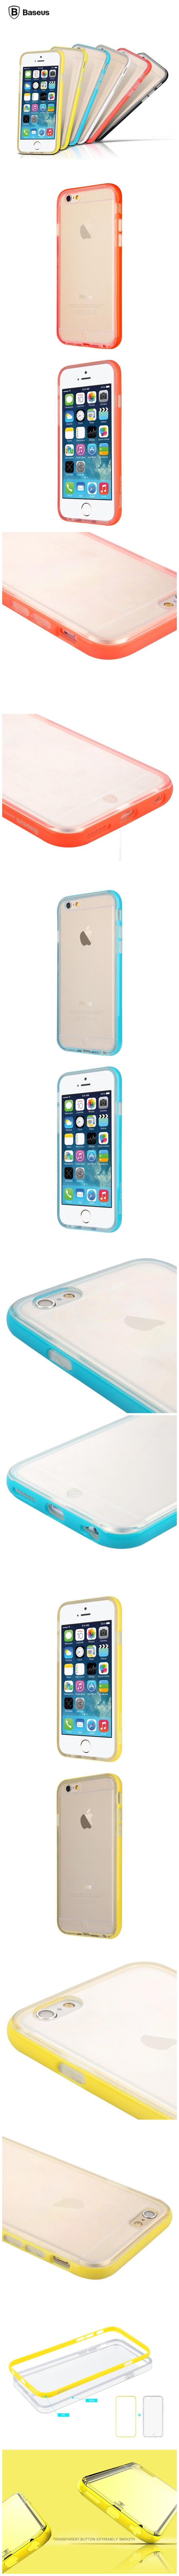 BASEUS-Fresh-TPU-Back-Cover-PC-Frame-Case-For-Apple-iPhone-6-6S-6Plus-6S-Plus-1017651-1